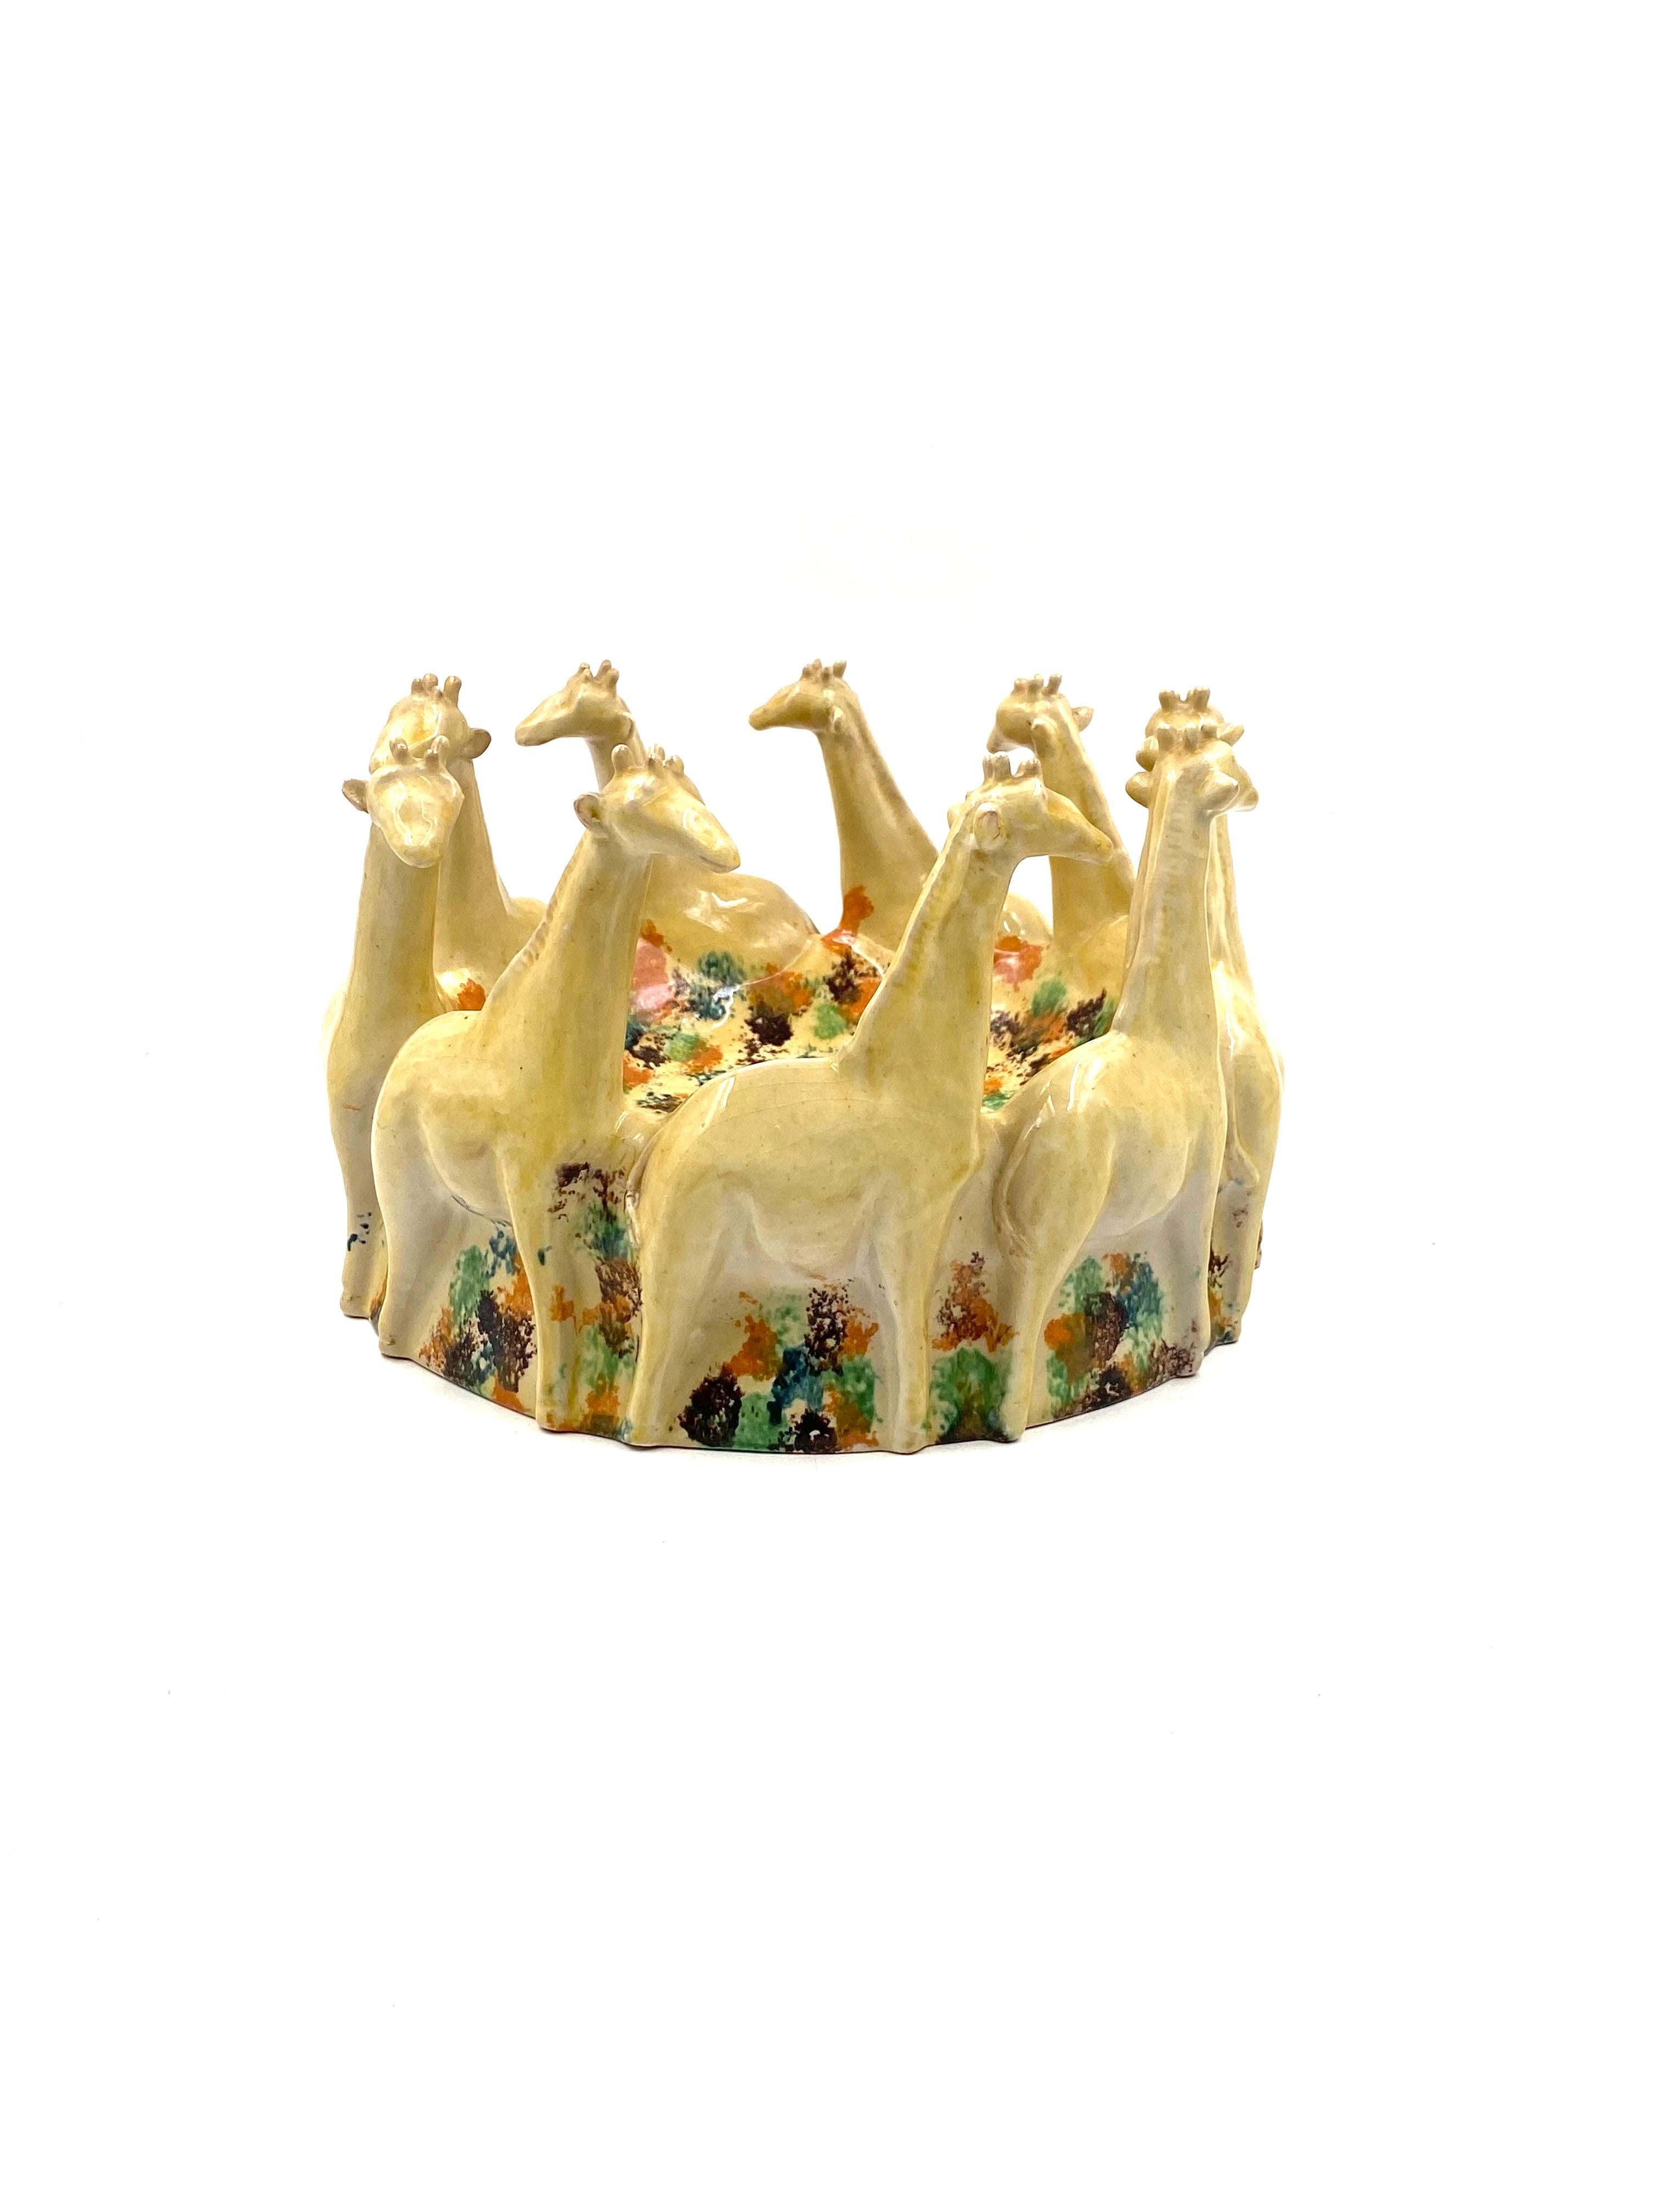 Postmodern giraffe ceramic centerpiece / vide poche, ND Dolfi Italy, 1990s For Sale 3